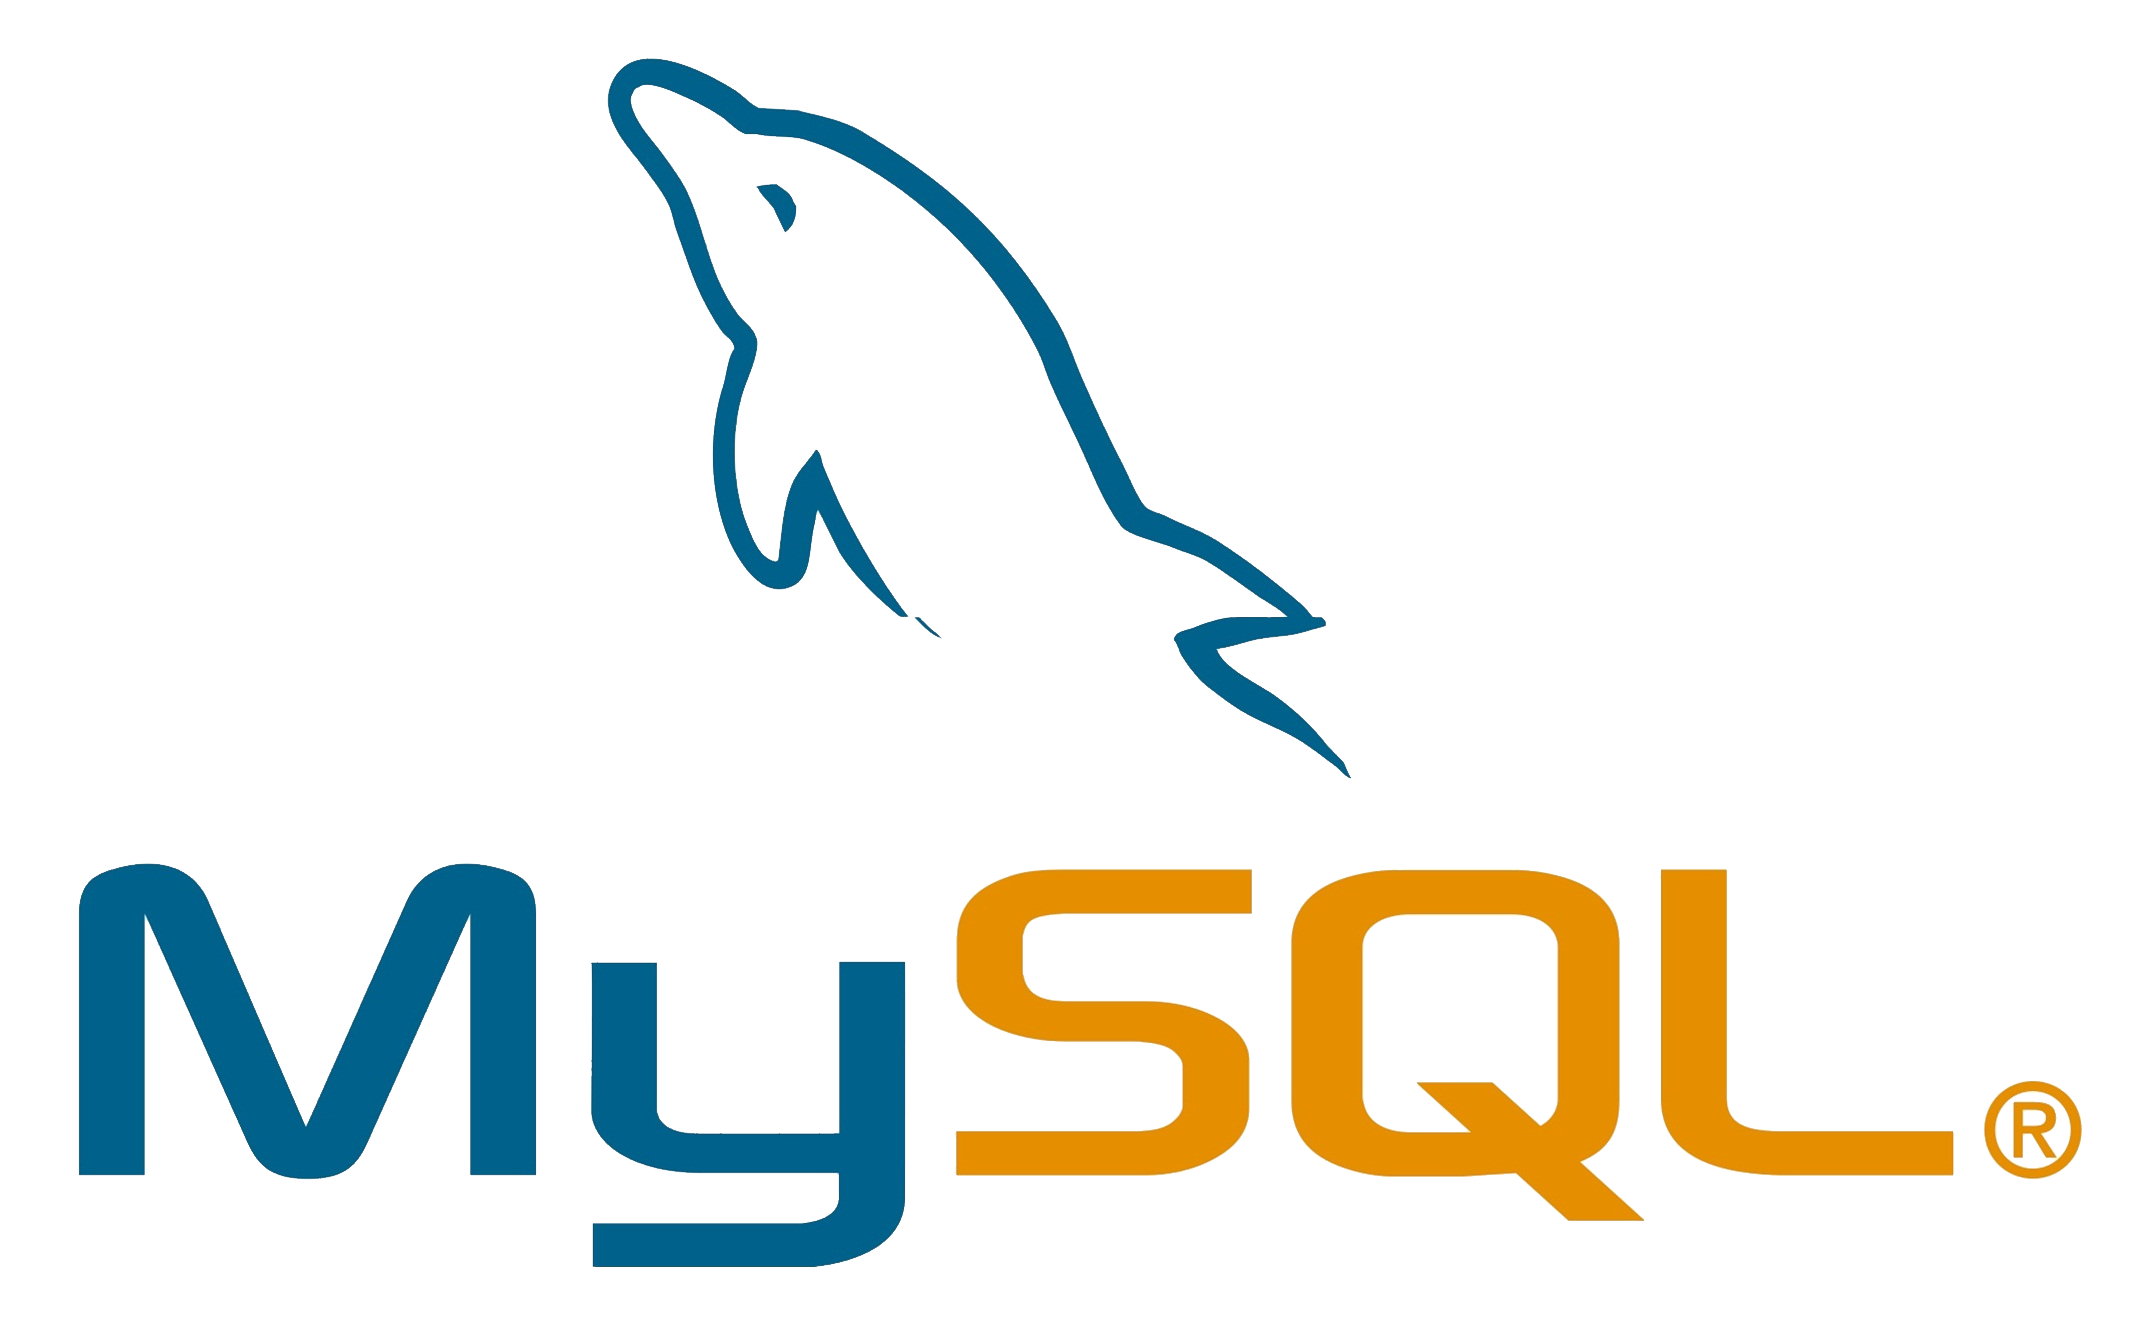 MySQLロゴ